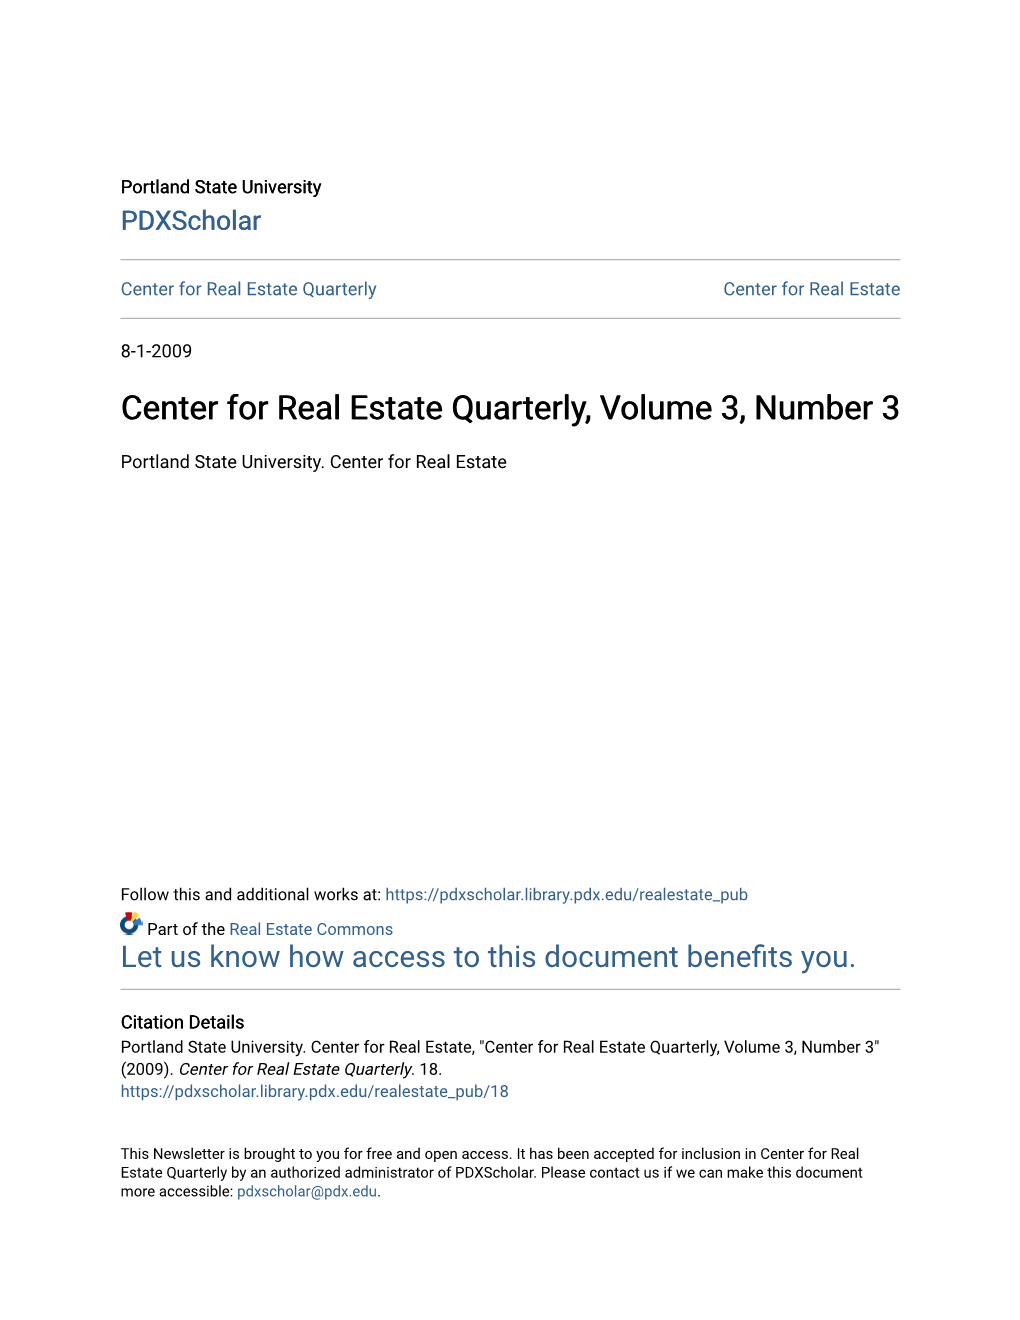 Center for Real Estate Quarterly, Volume 3, Number 3